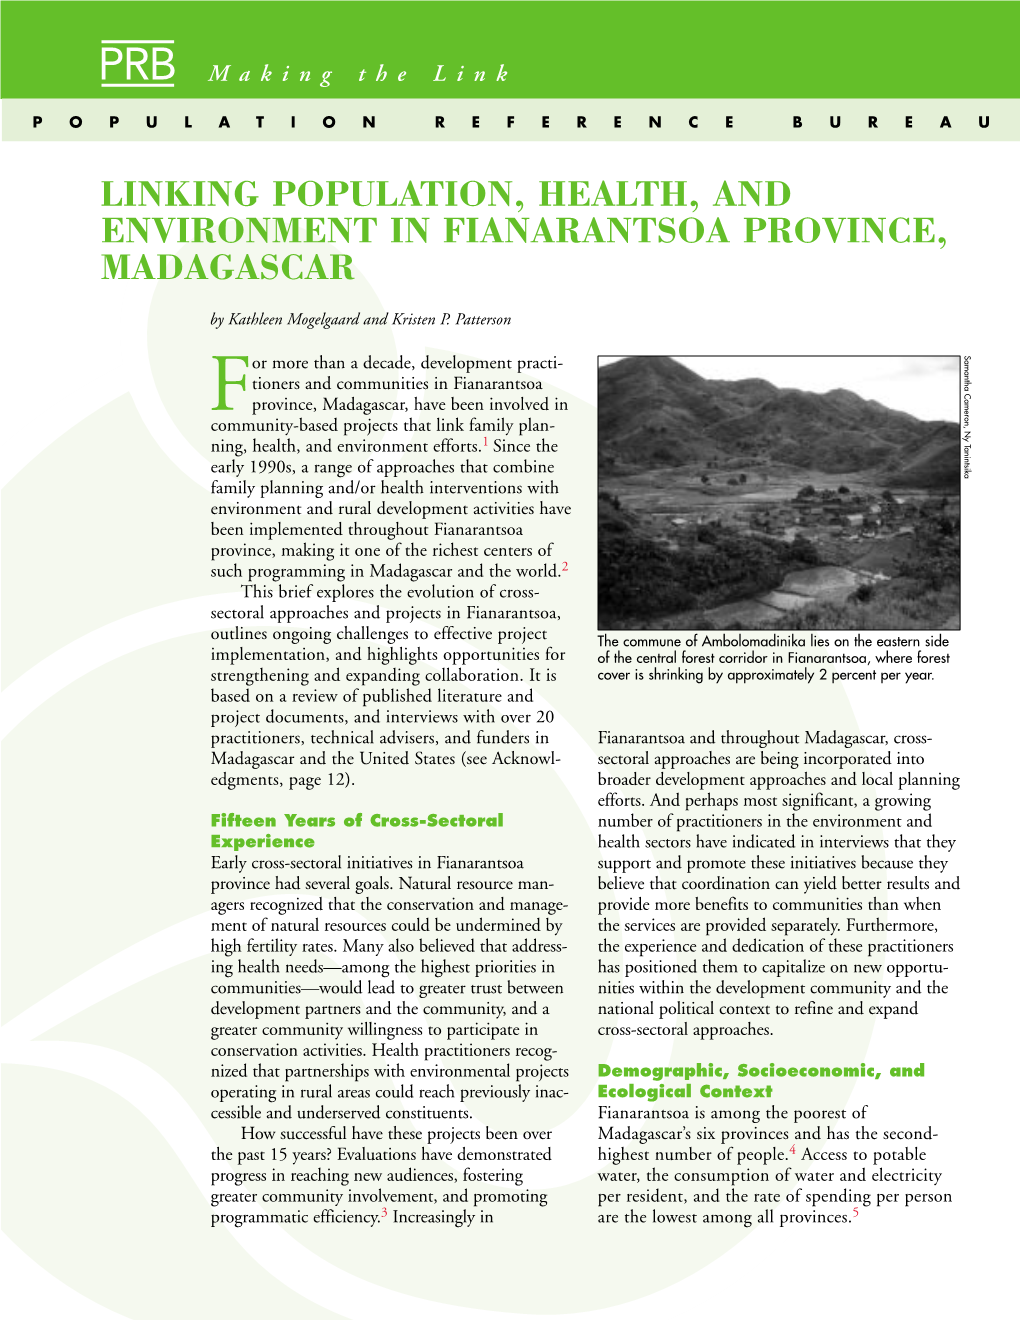 Linking Population, Health, and Environment in Fianarantsoa Province, Madagascar